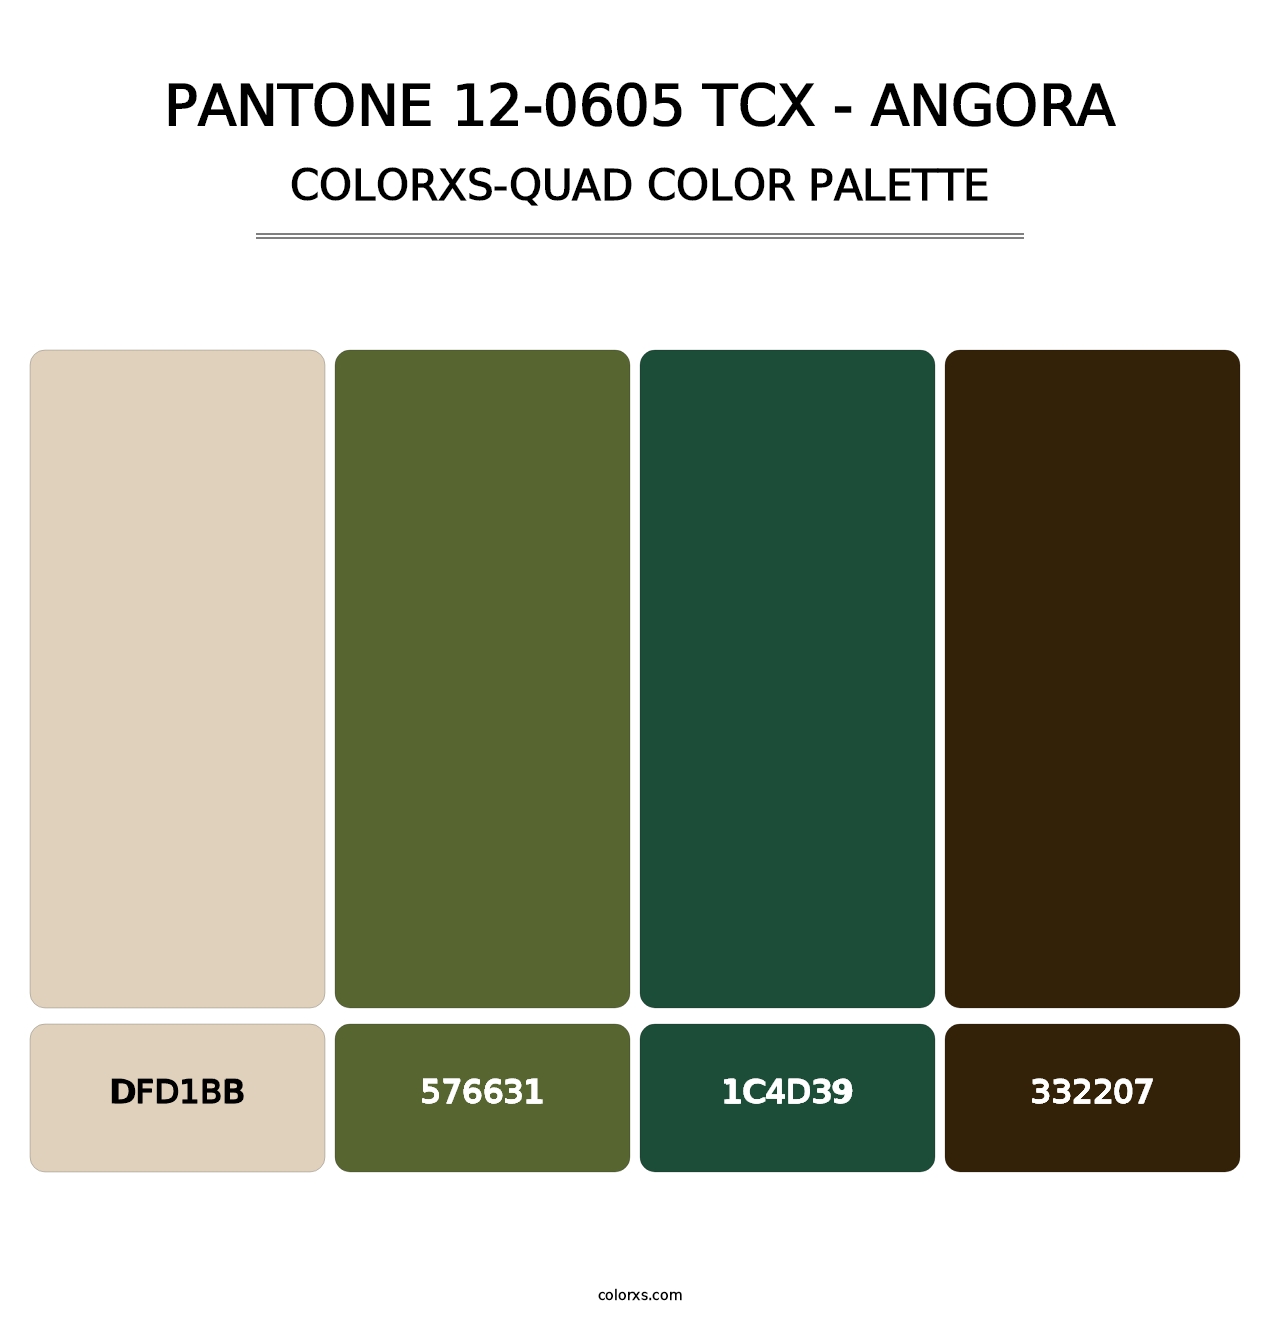 PANTONE 12-0605 TCX - Angora - Colorxs Quad Palette